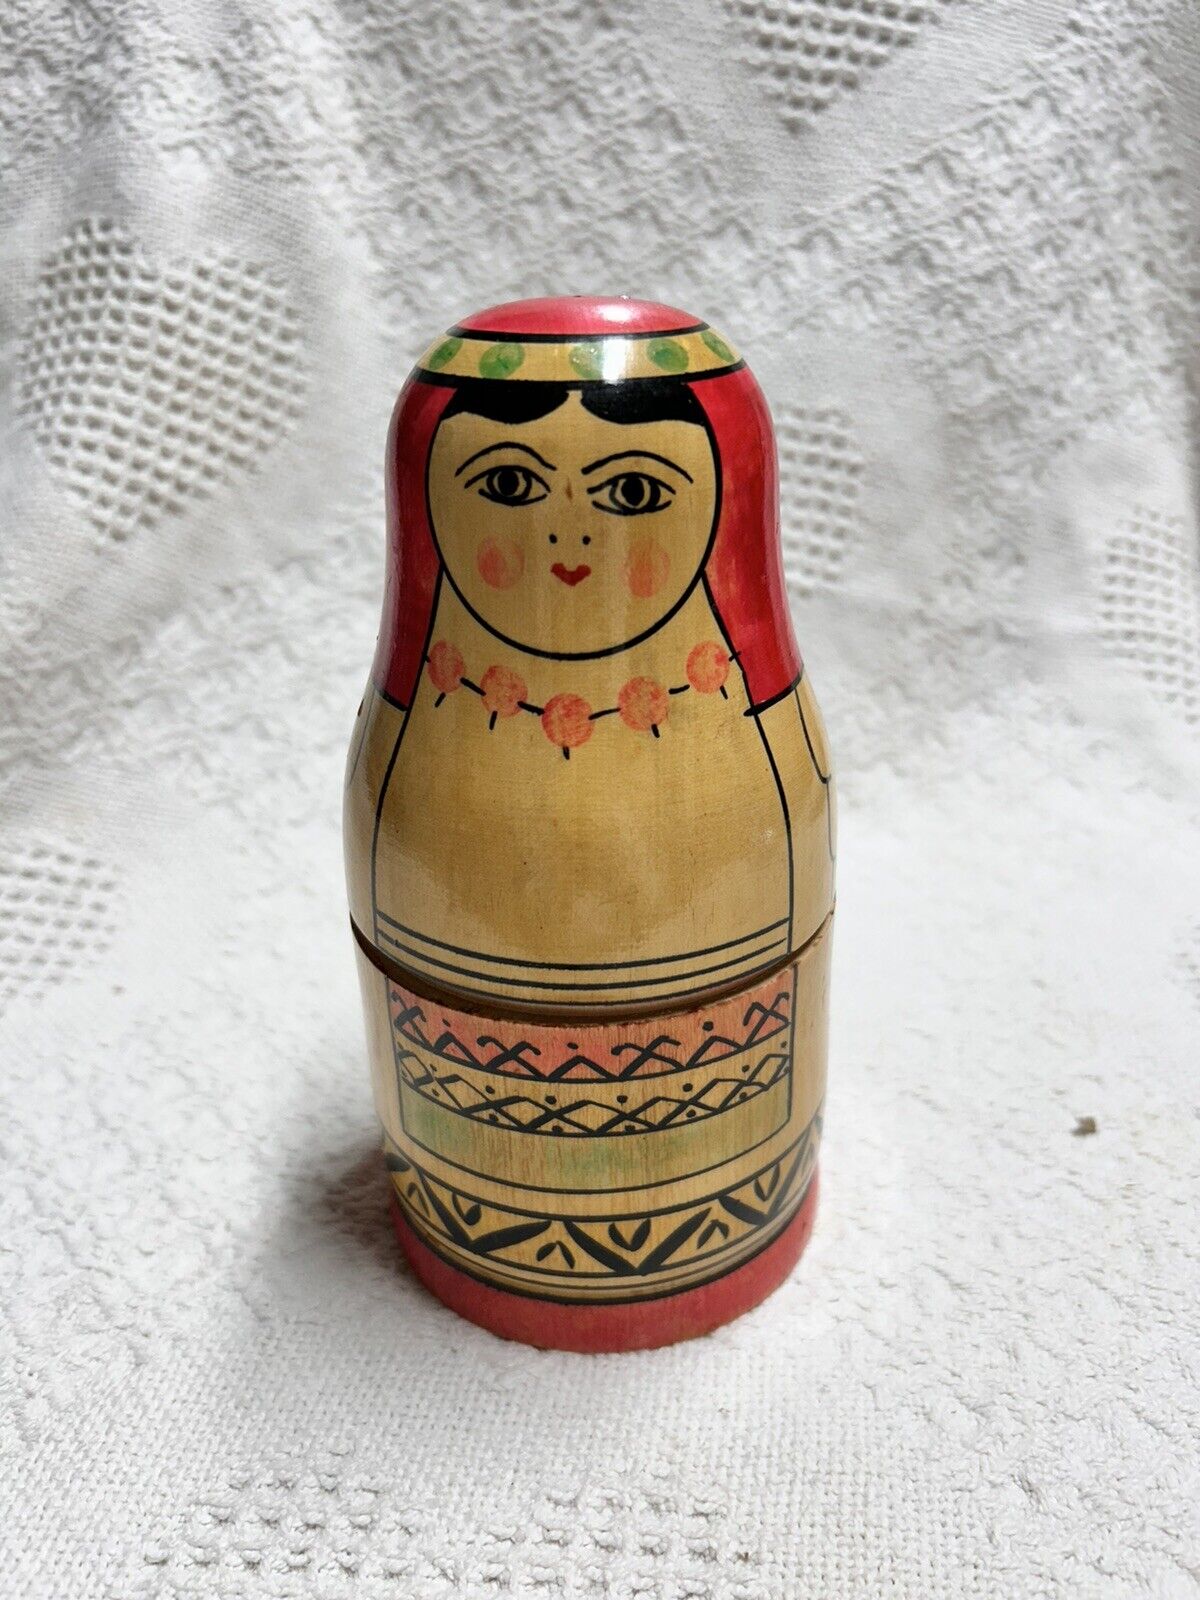 Vintage Russian Matryoshka Nesting Dolls  - 6 Wooden Hand Painted USSR